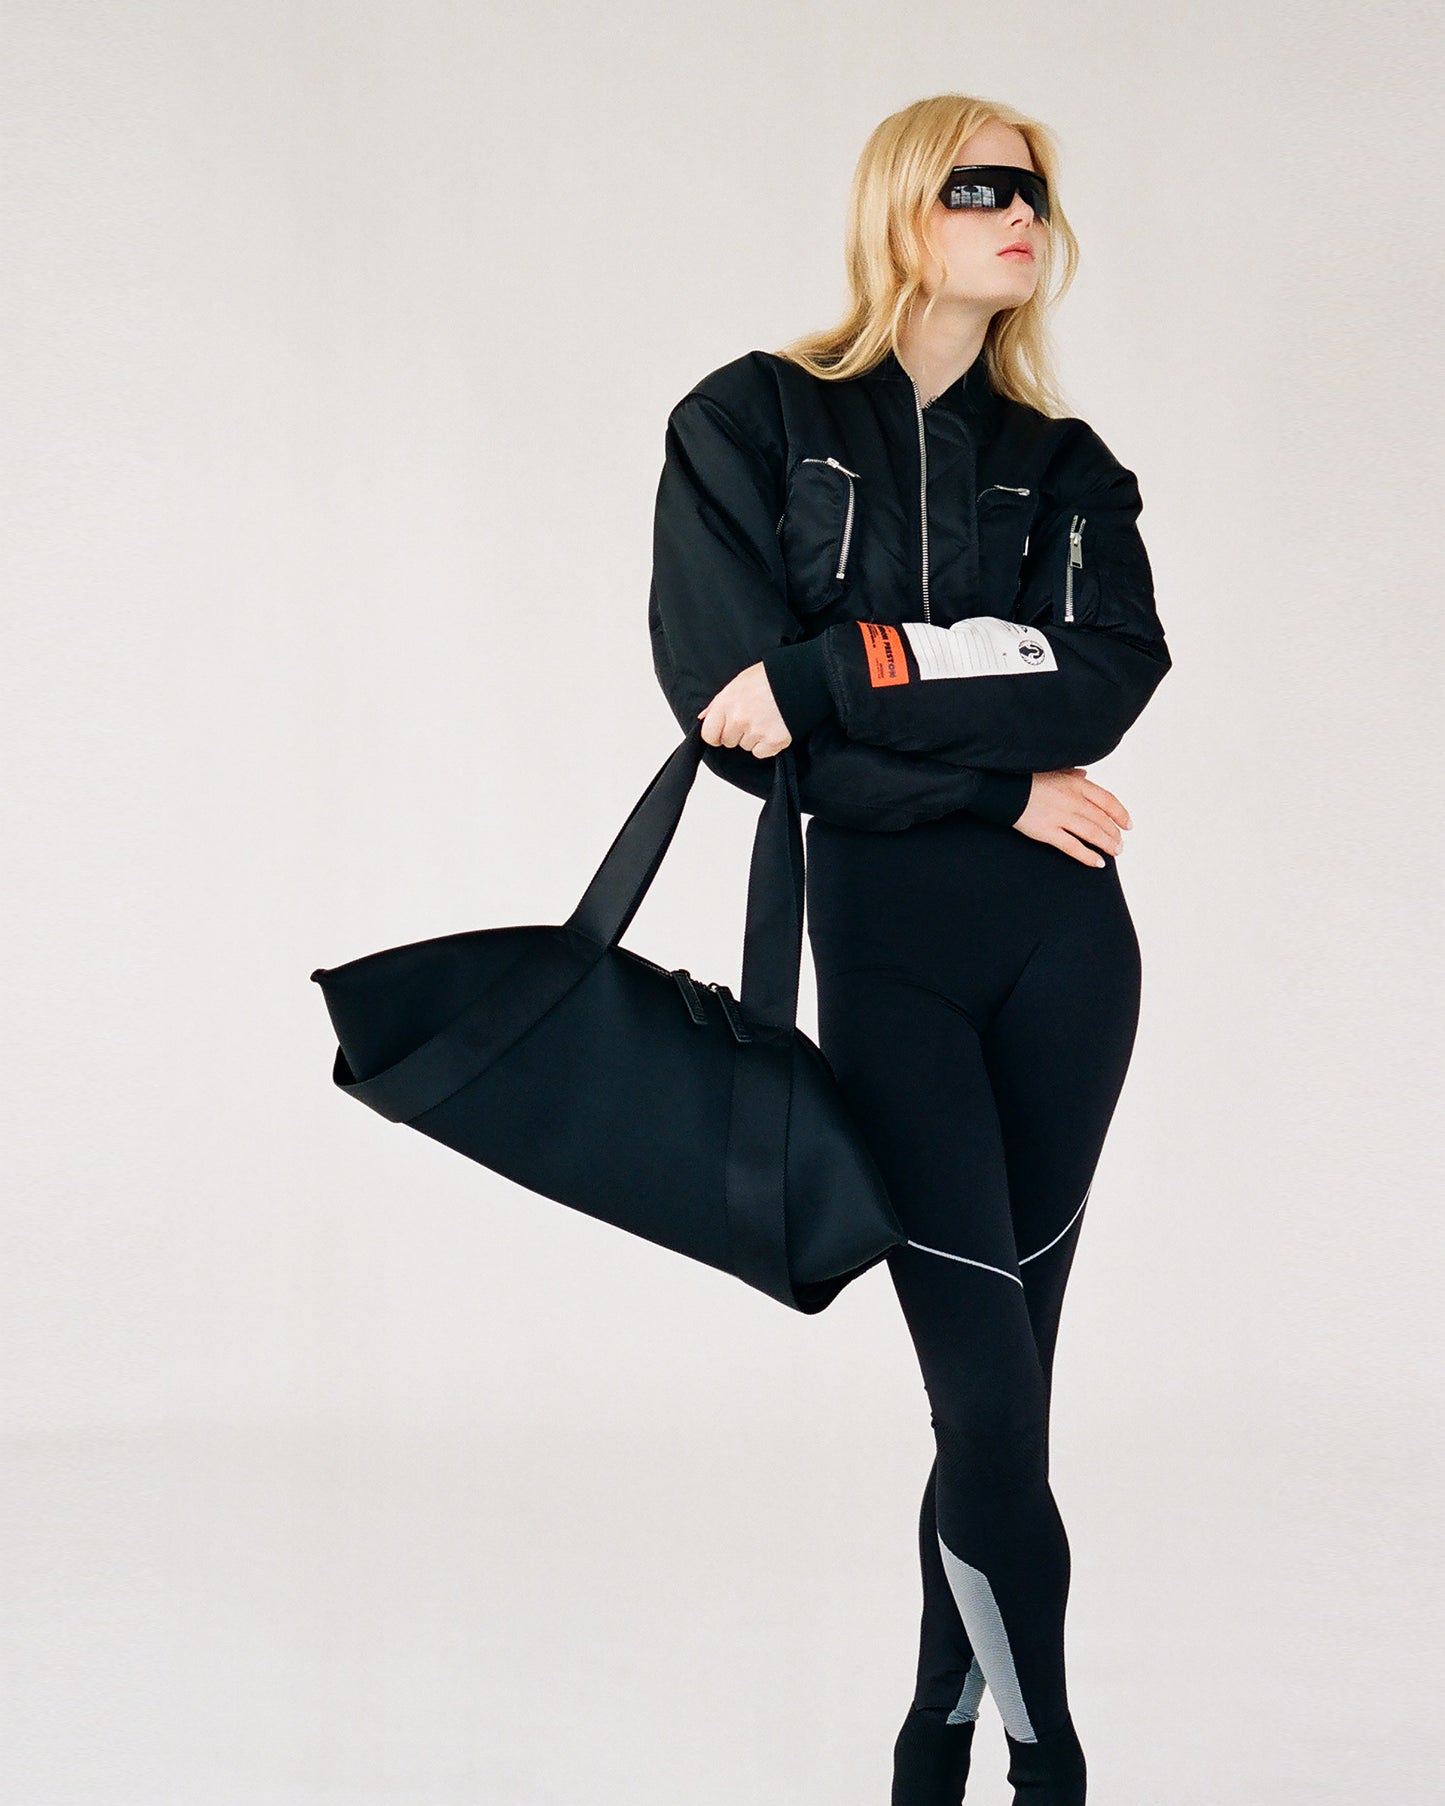 adidas Yoga Duffel Bag - Black, Women's Yoga